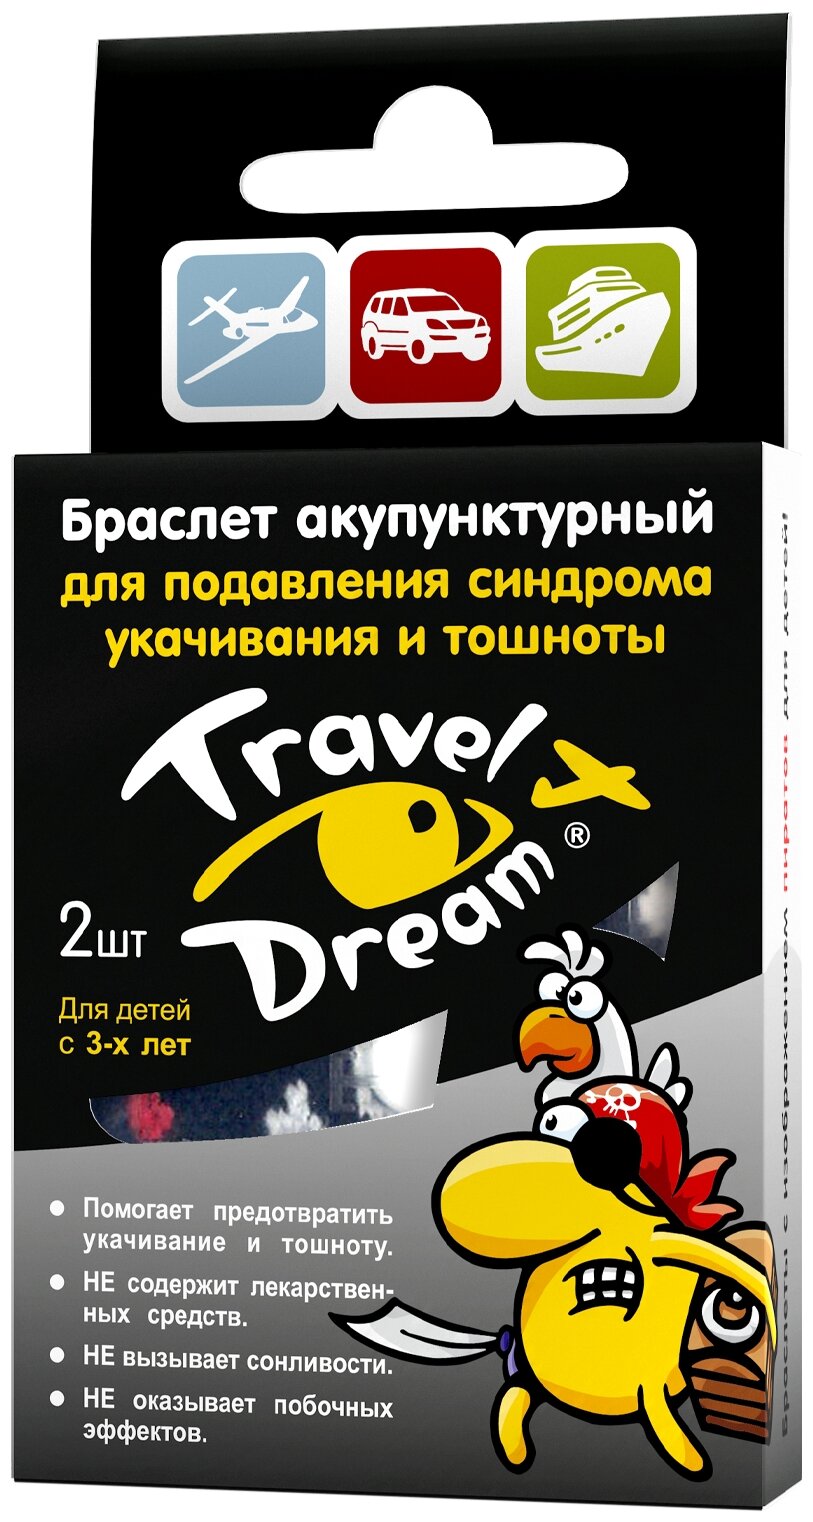 Акупунктурный браслет Zeldis Pharma Travel Dream детский (пираты), 2 шт.